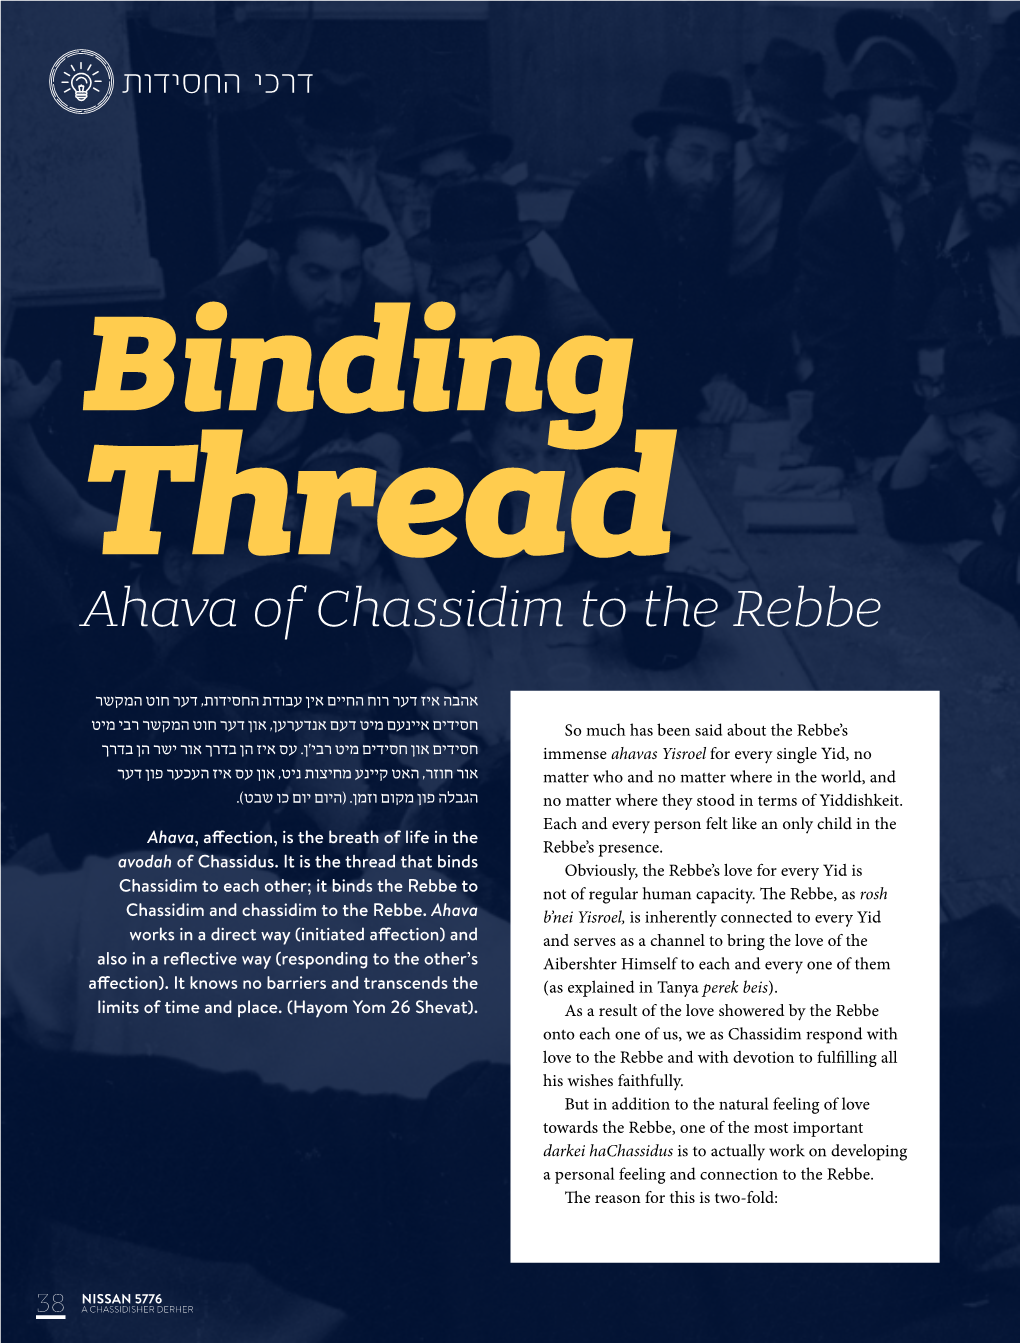 Ahava of Chassidim to the Rebbe